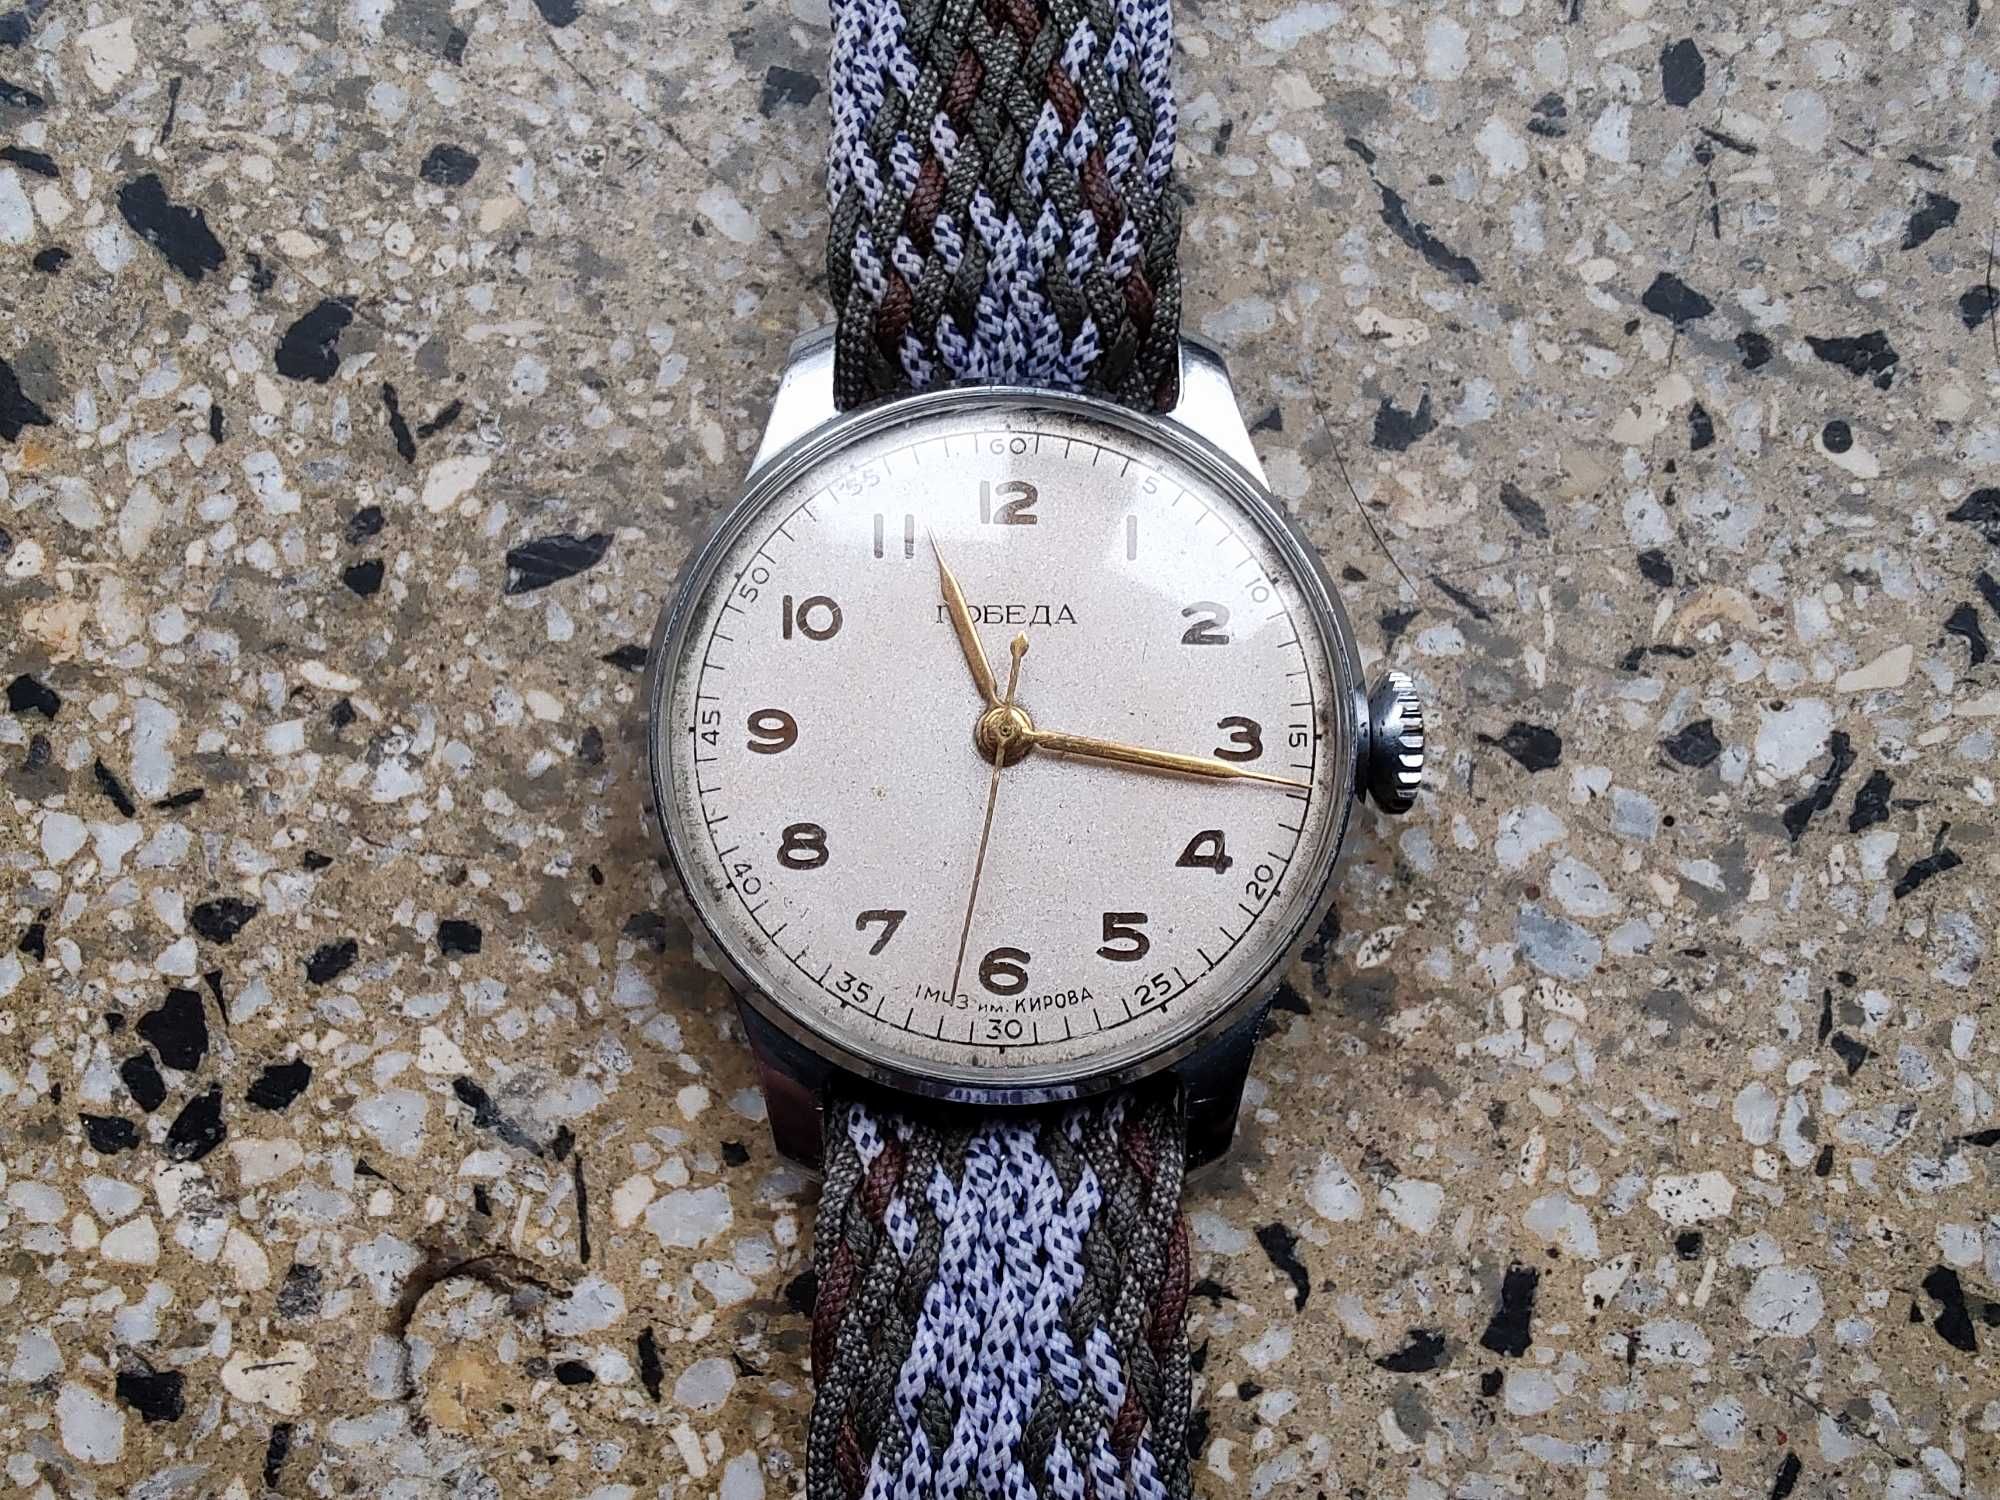 Zegarek mechaniczny Pabieda (Pobeda, Pabeda, Побєда) - lata '60